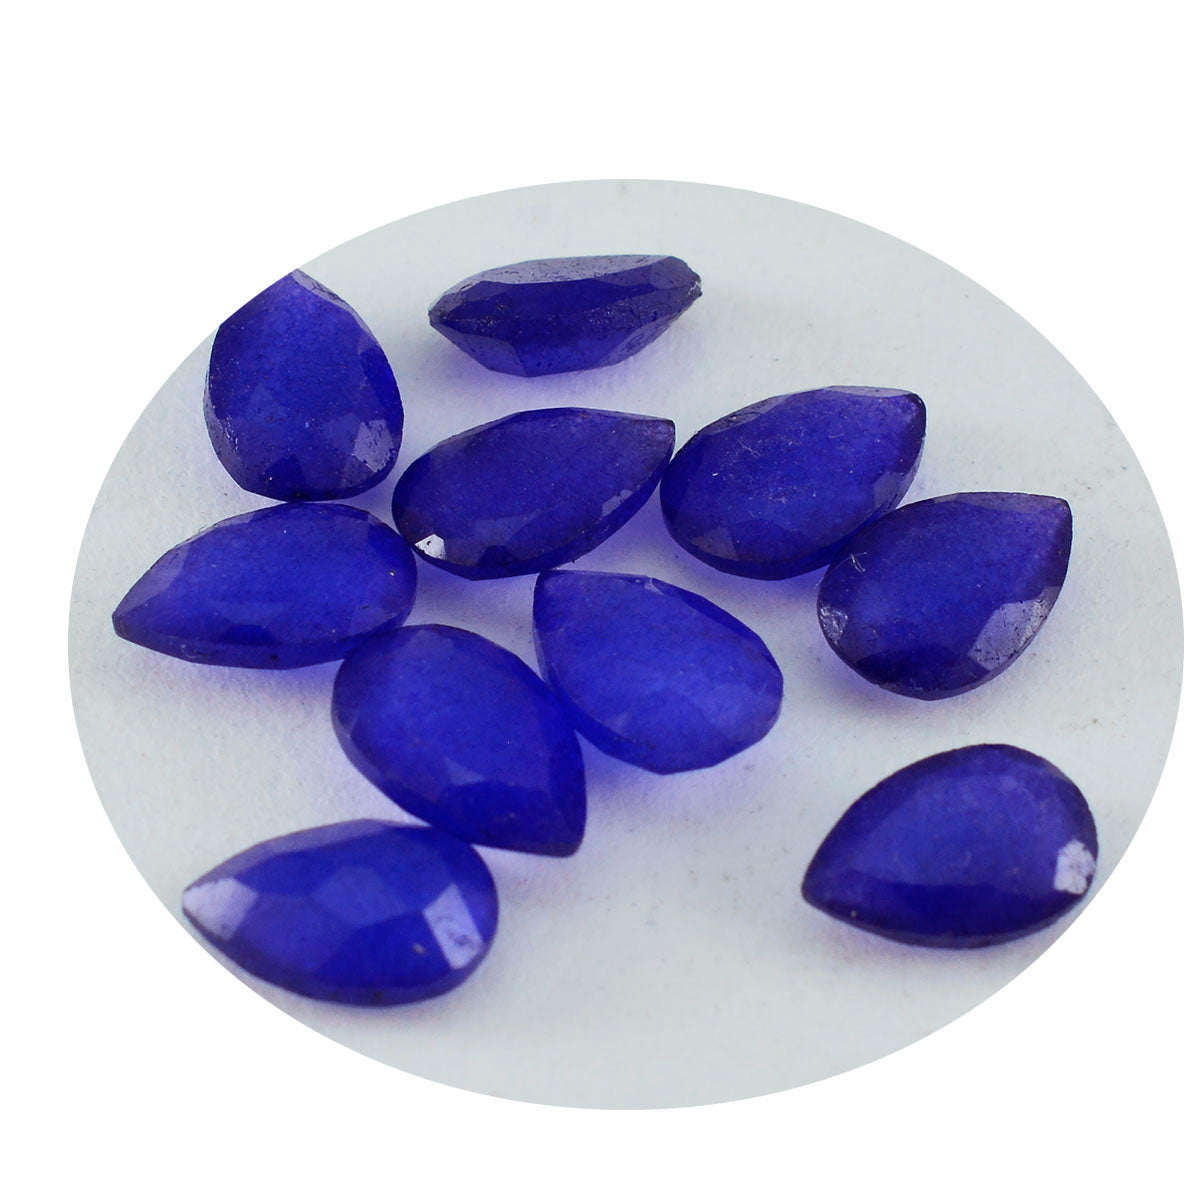 riyogems 1 st äkta blå jaspis facetterad 4x6 mm päronform häpnadsväckande kvalitetspärla